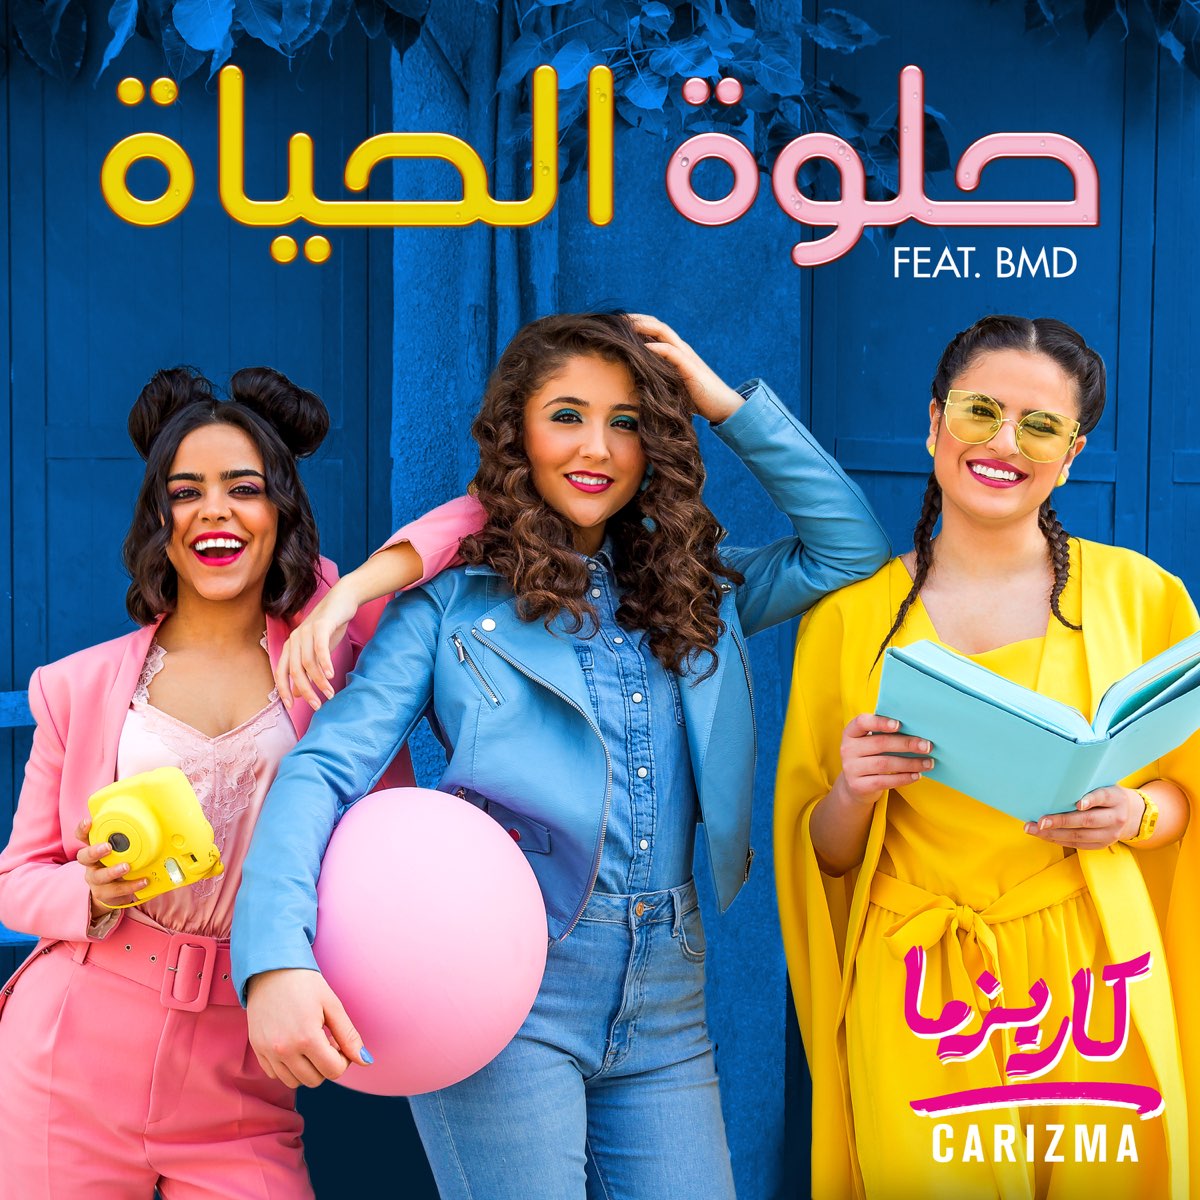 Carizma featuring BMd — حلوة الحياة cover artwork